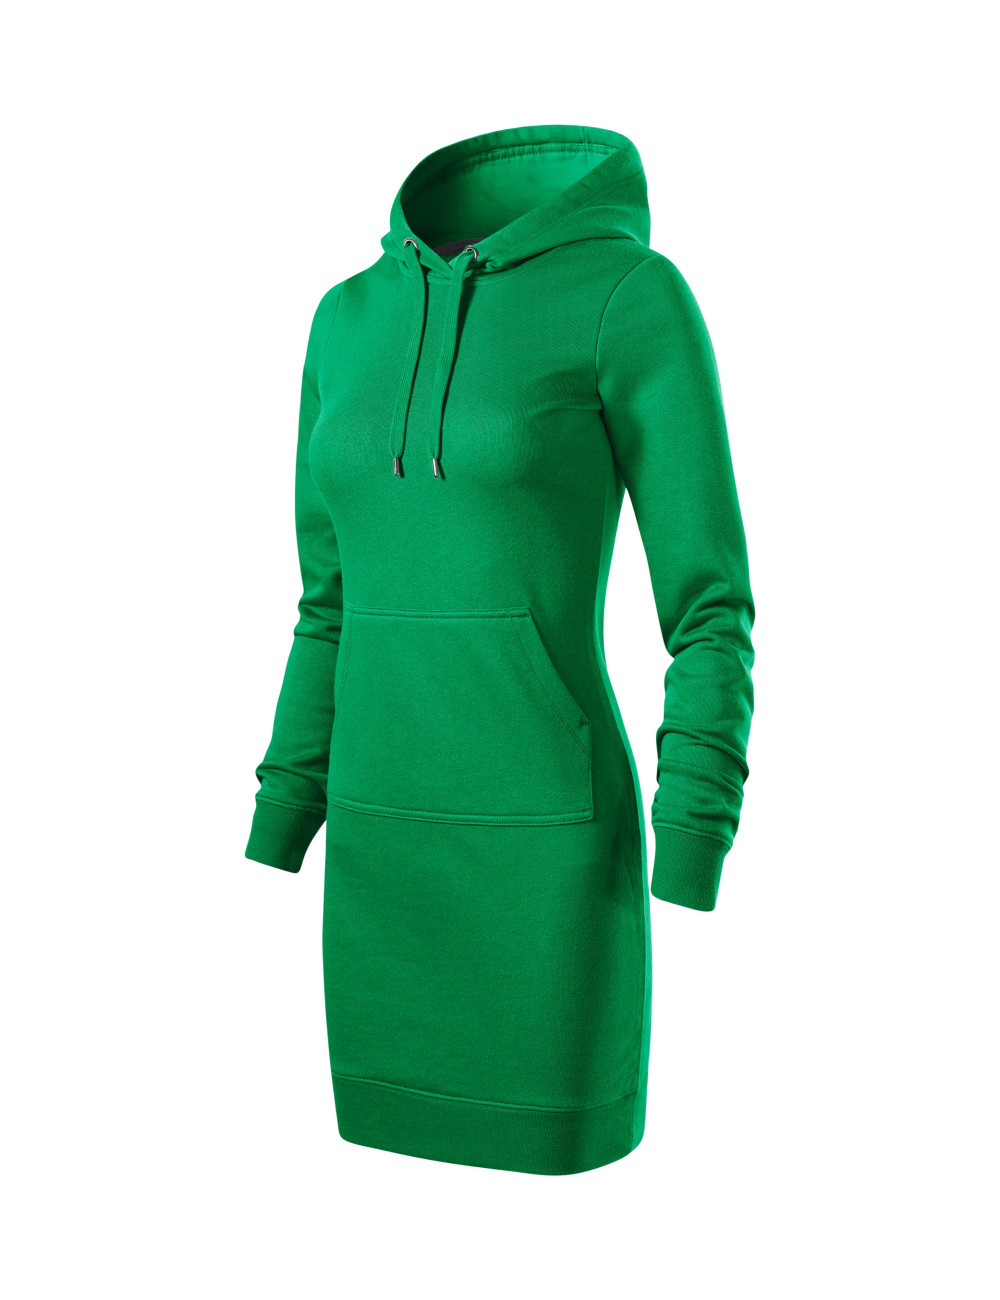 Women`s dress snap 419 grass green Adler Malfini®